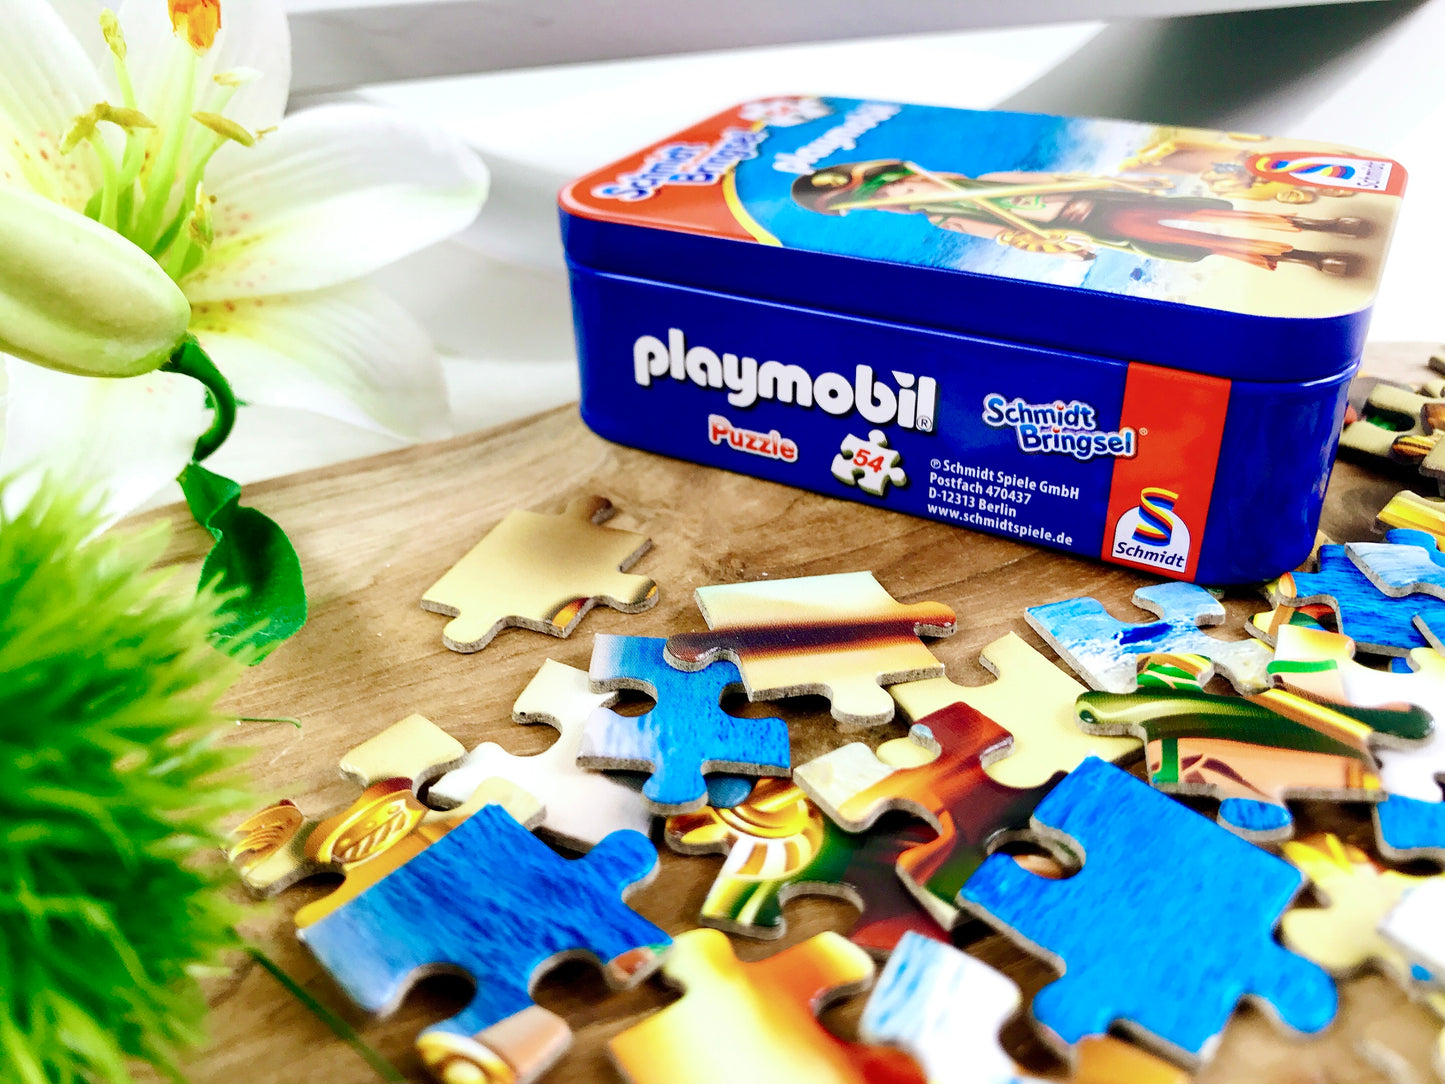 Playmobil Mini Puzzle Pirat, Schmidt Bringsel, 56999